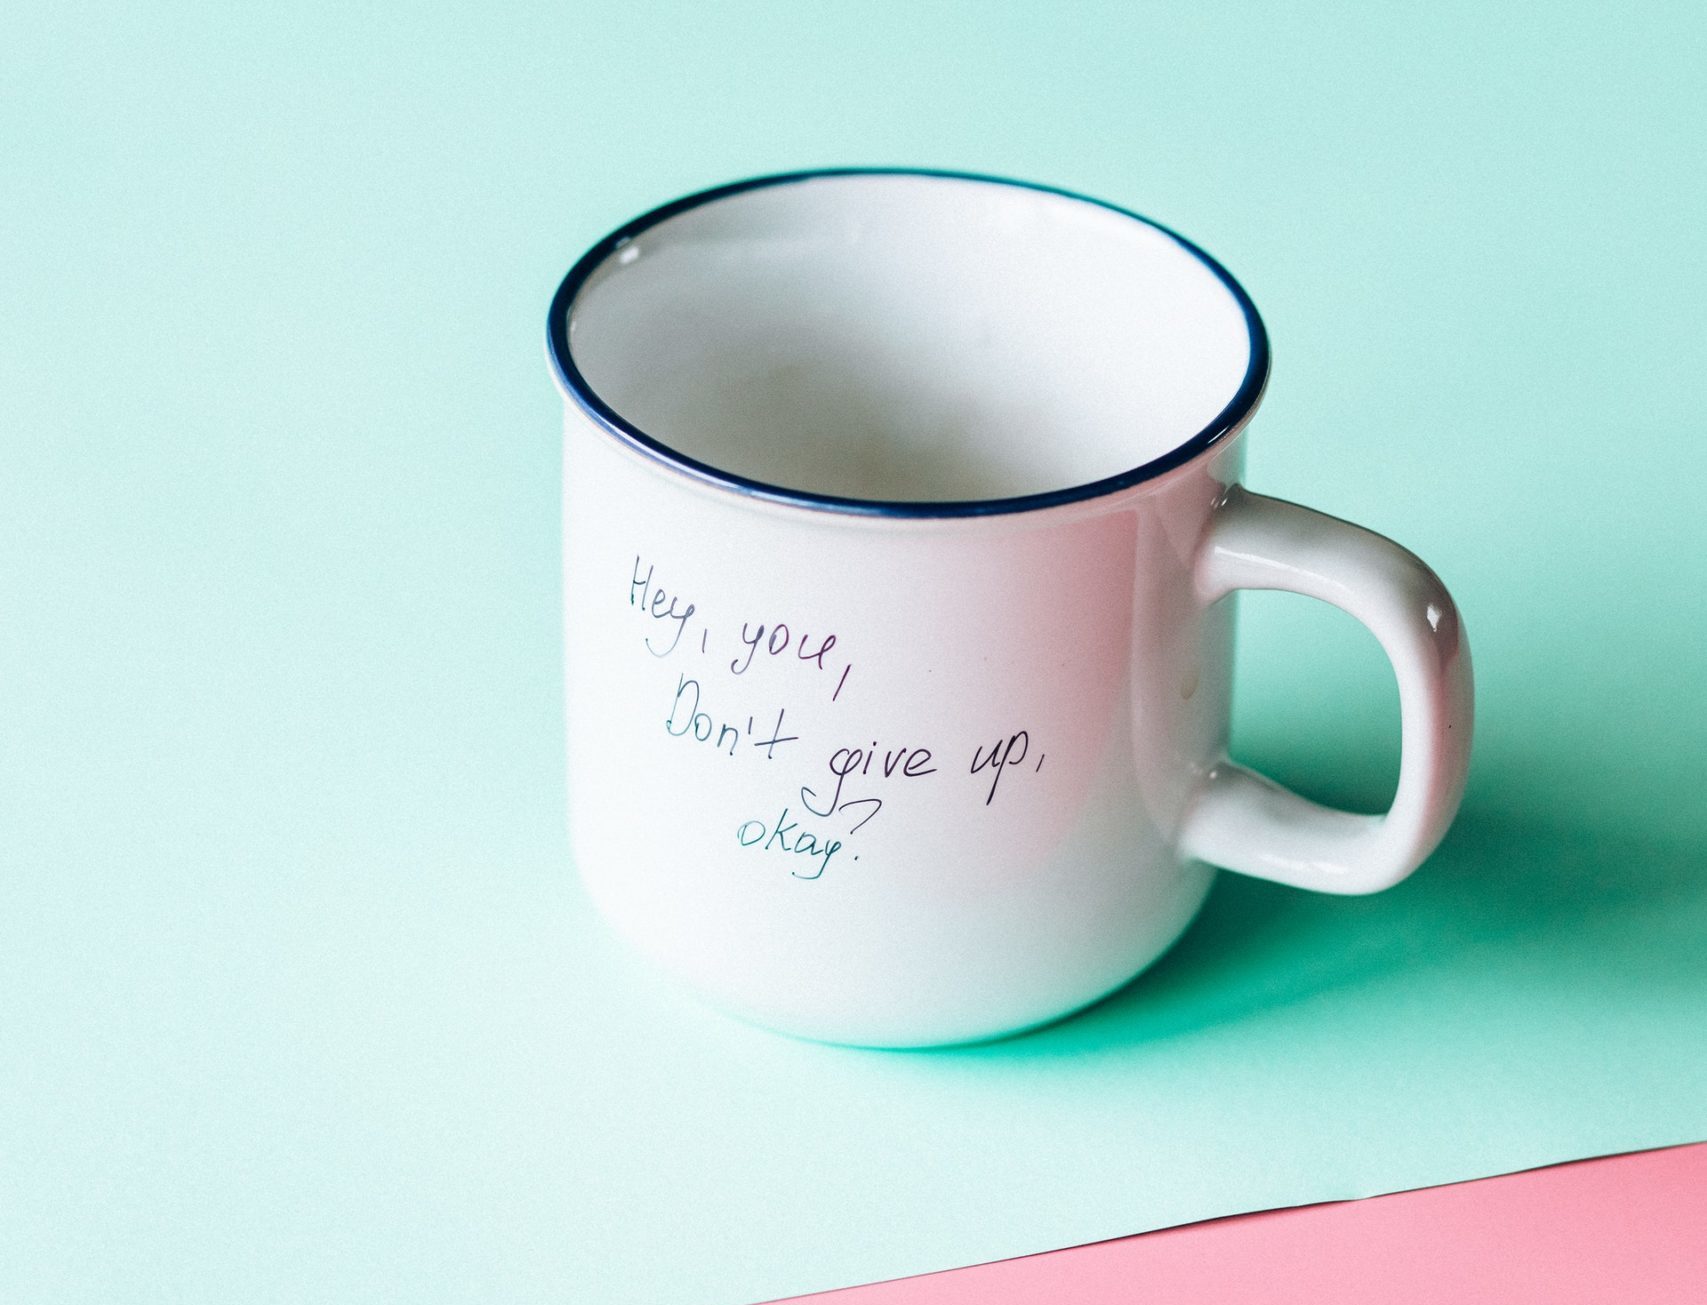 powerful message on a mug